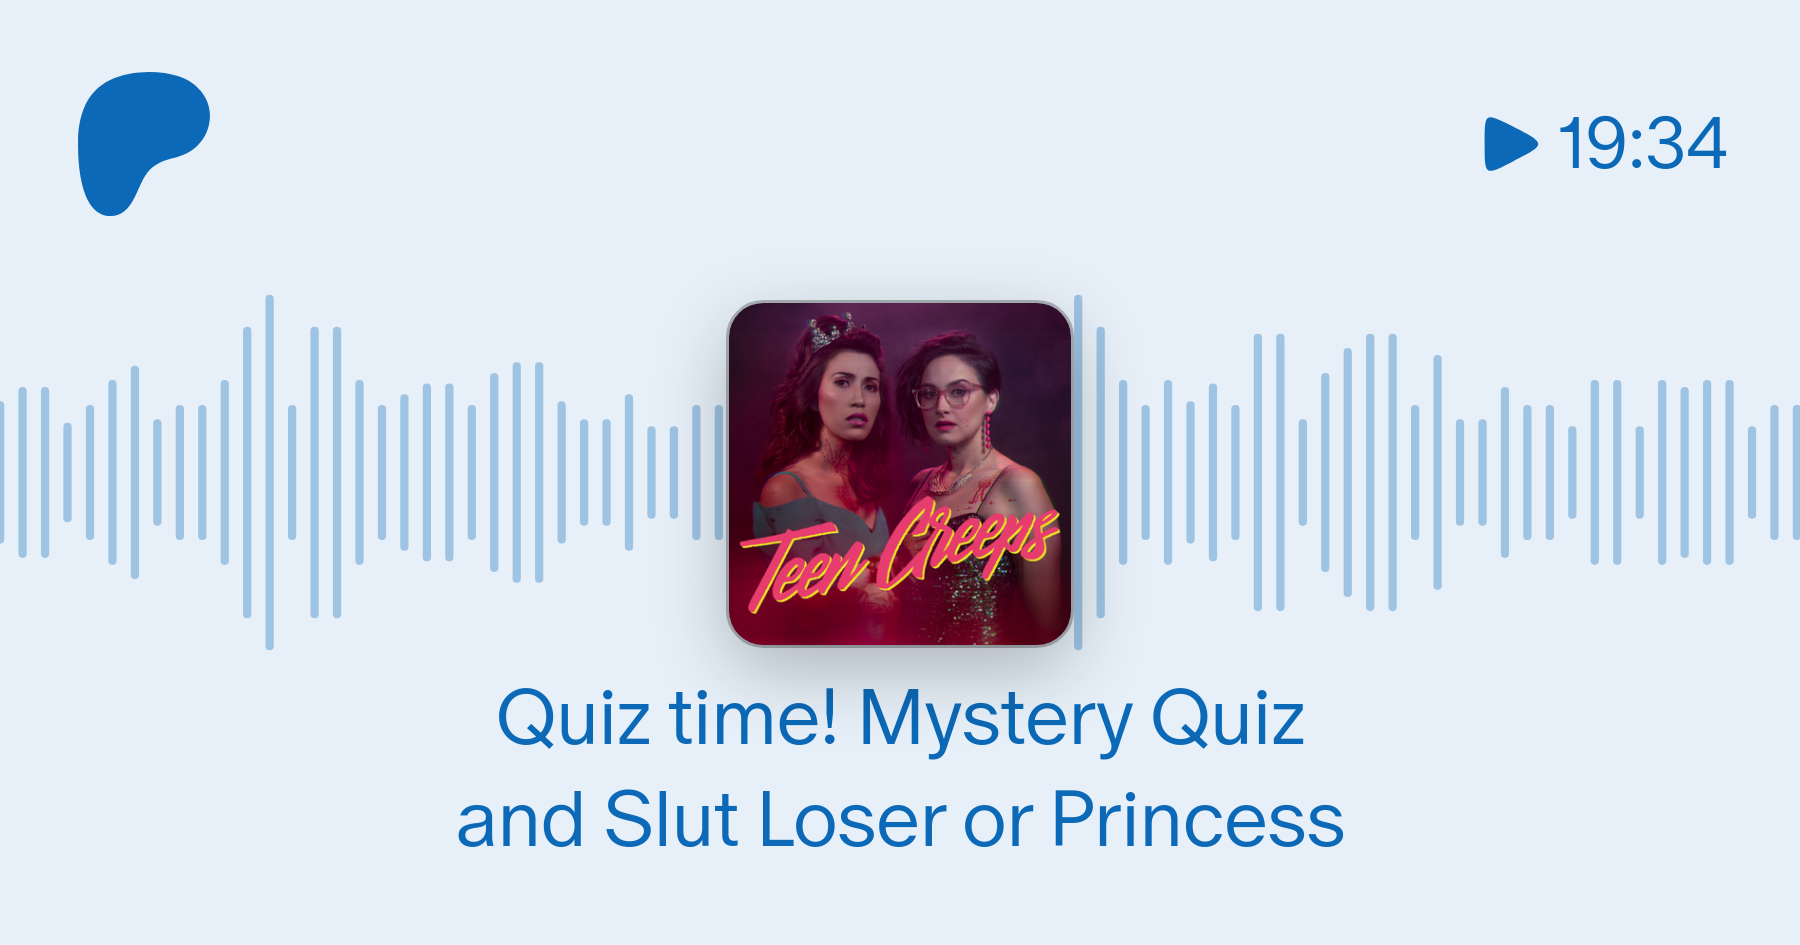 Slut loser and princess test